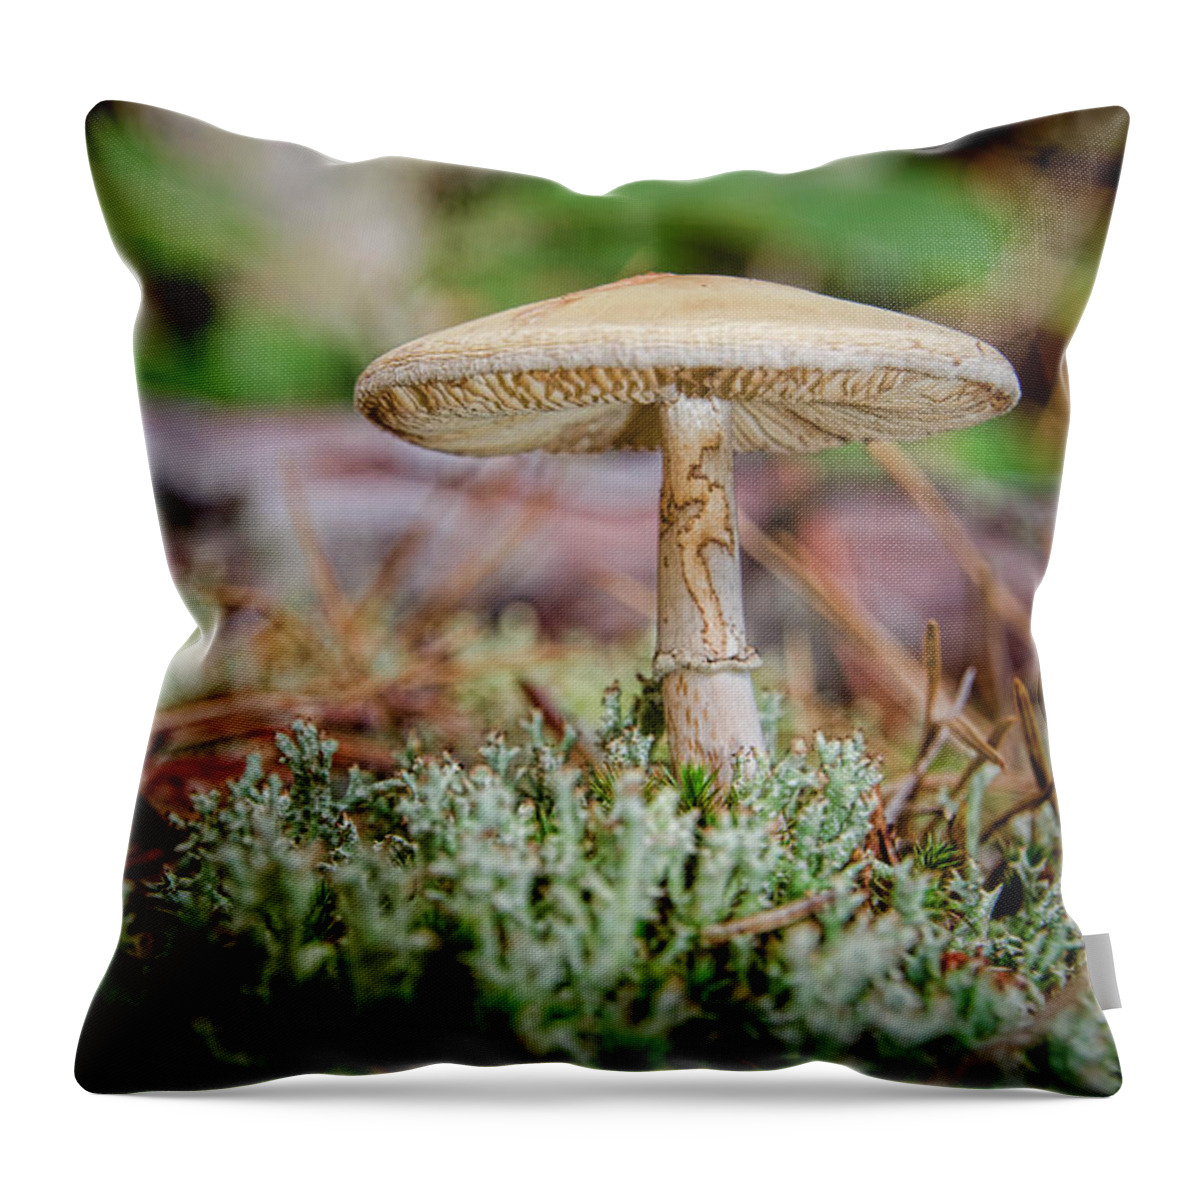 Mushroom Throw Pillow featuring the photograph Mushroom1 by Beth Venner